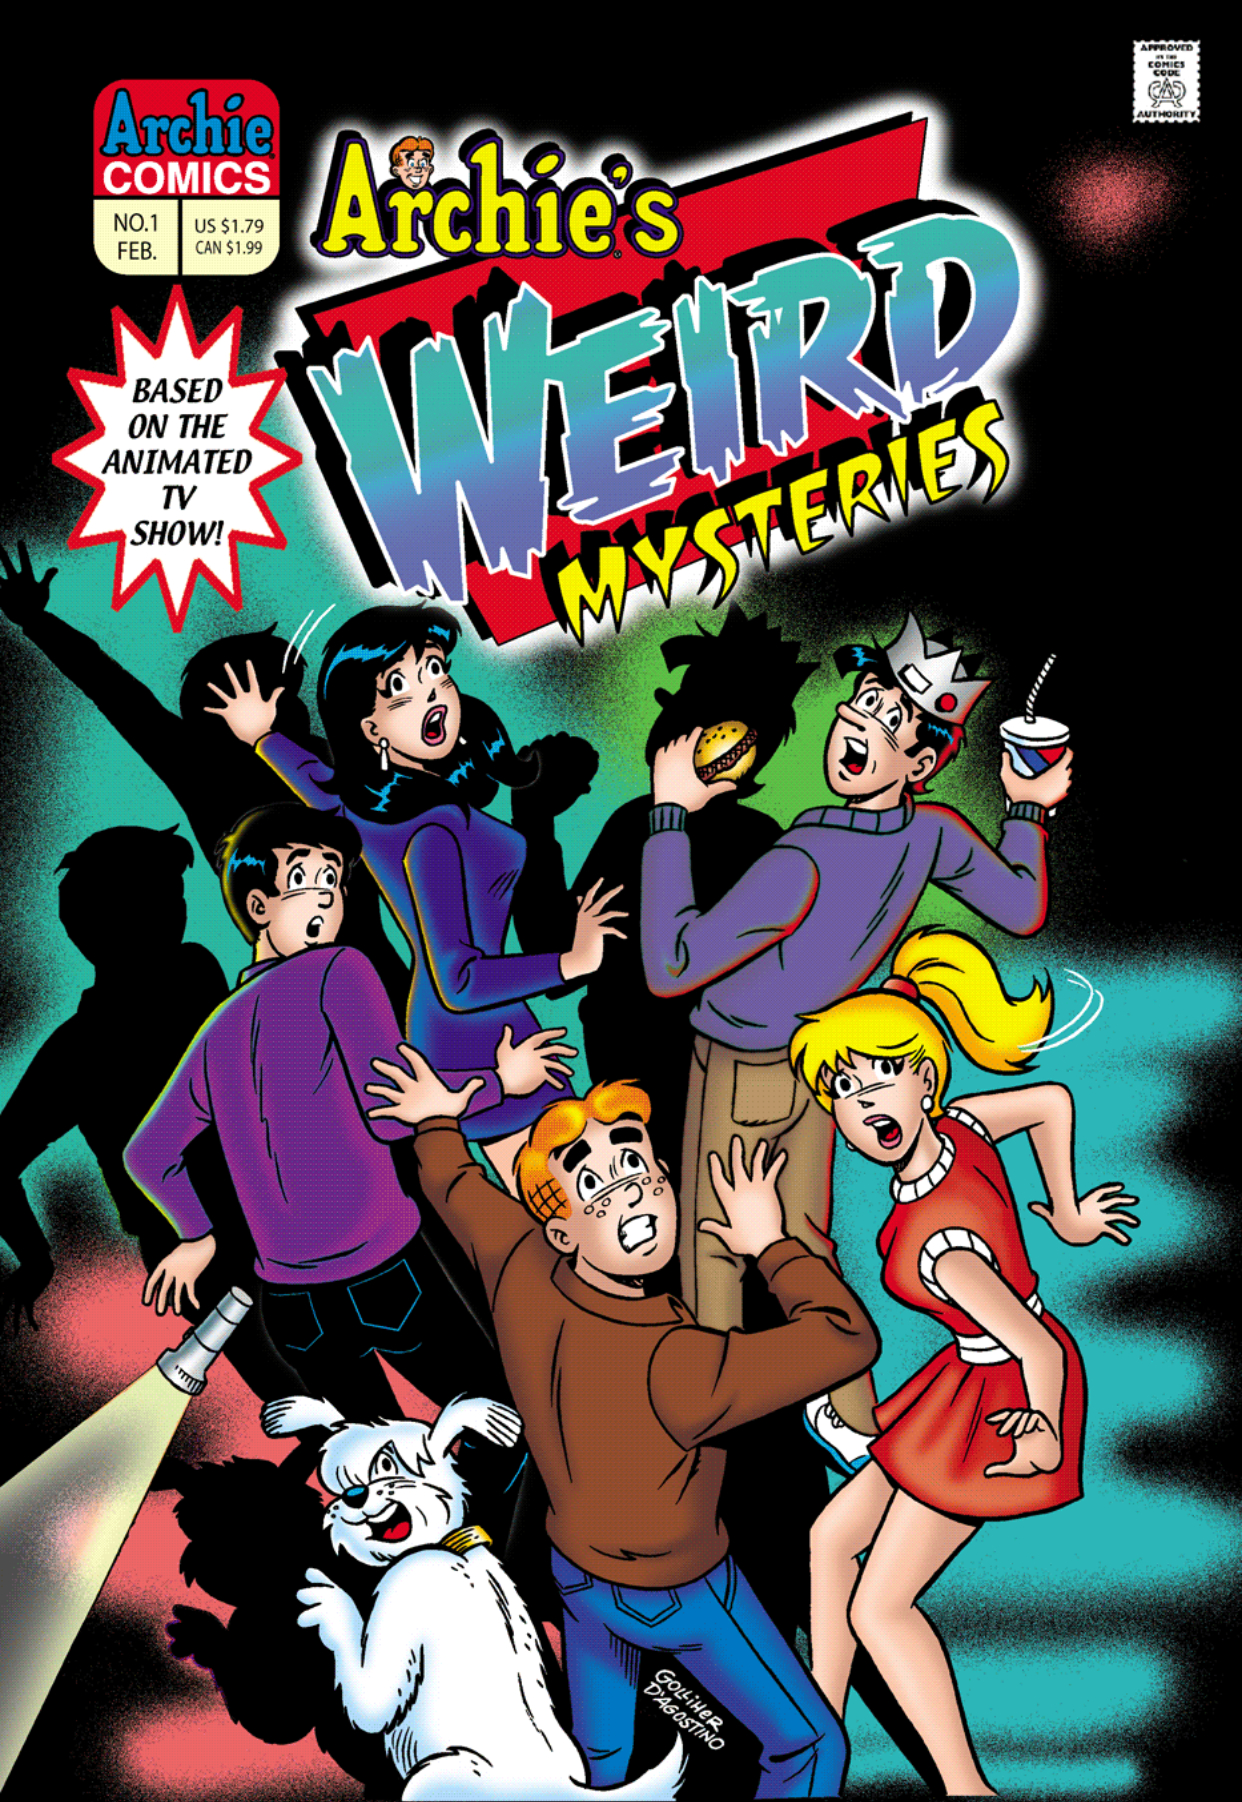 Weirdest Mysteries Archie Porn - Archie S Weird Mysteries Issue 1 | Read Archie S Weird Mysteries Issue 1  comic online in high quality. Read Full Comic online for free - Read comics  online in high quality .| READ COMIC ONLINE